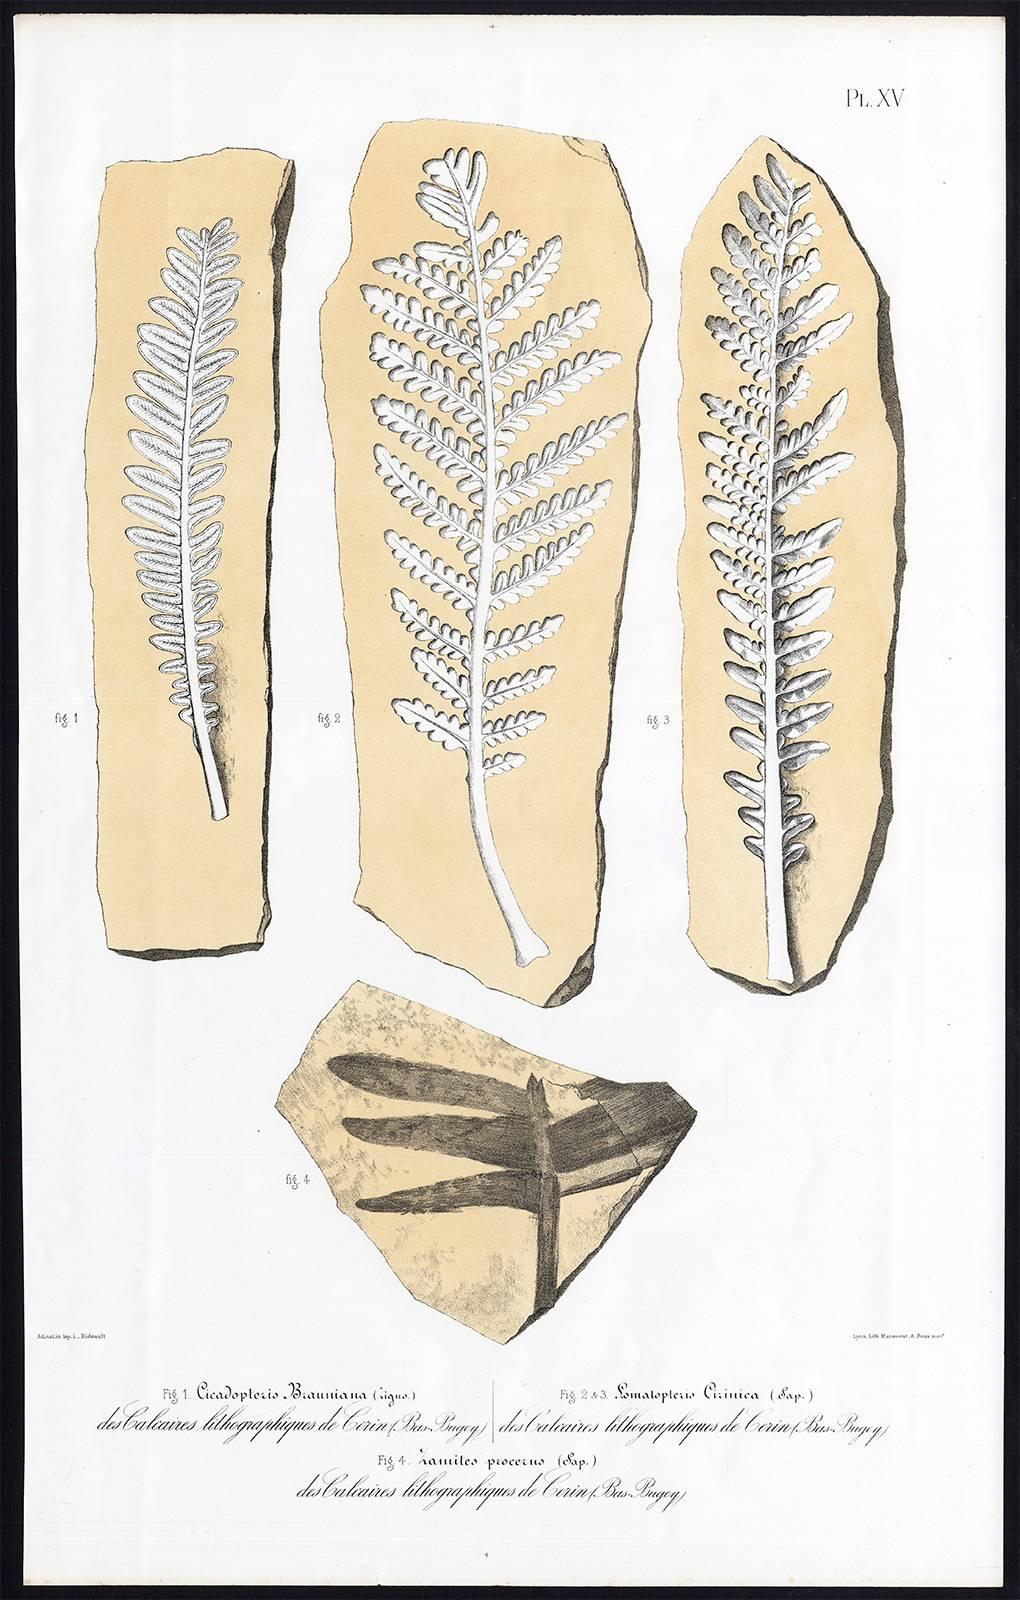 Victor Thiolliere Figurative Print - Cicadopteris Brauniana. Lomalopleris Cirinica. Zamiter procerus.